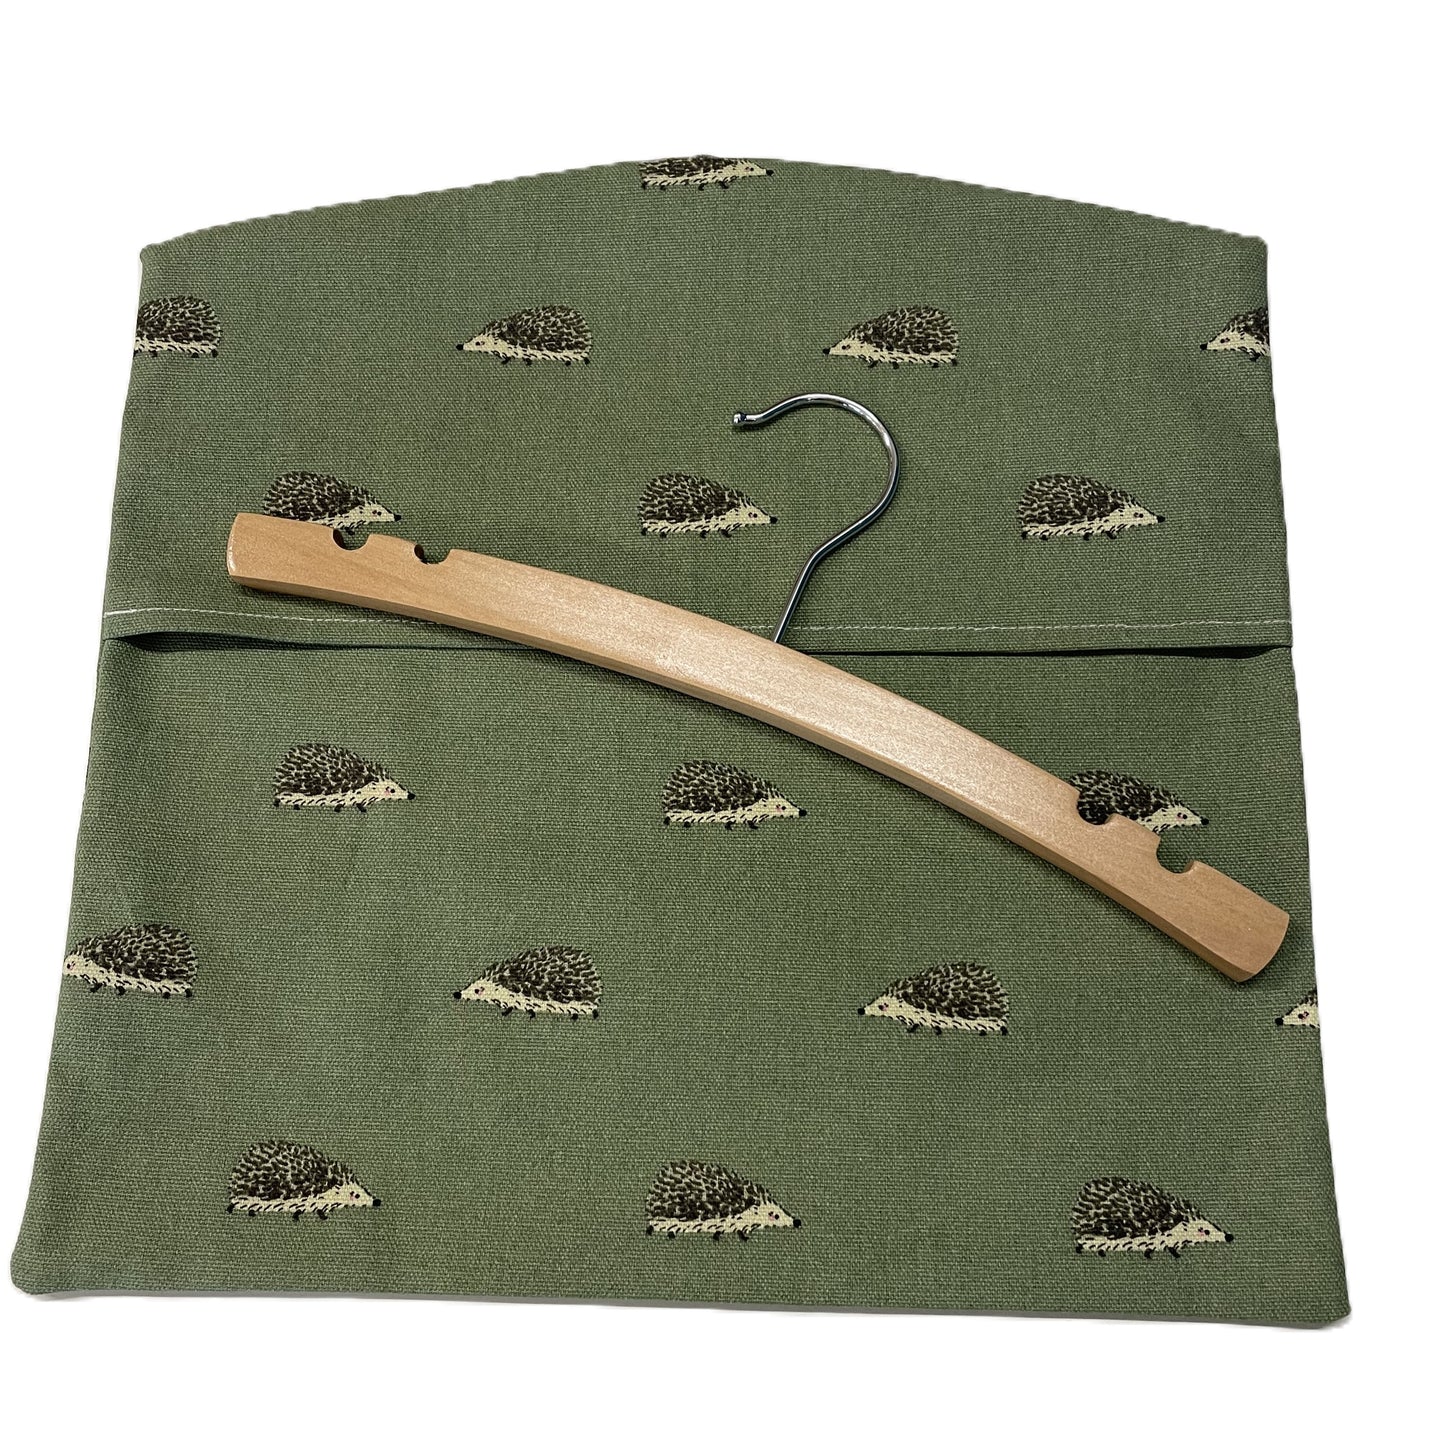 Raspberry Leaf Interiors Handmade Fabric Peg Bag Sophie Allport Hedgehog